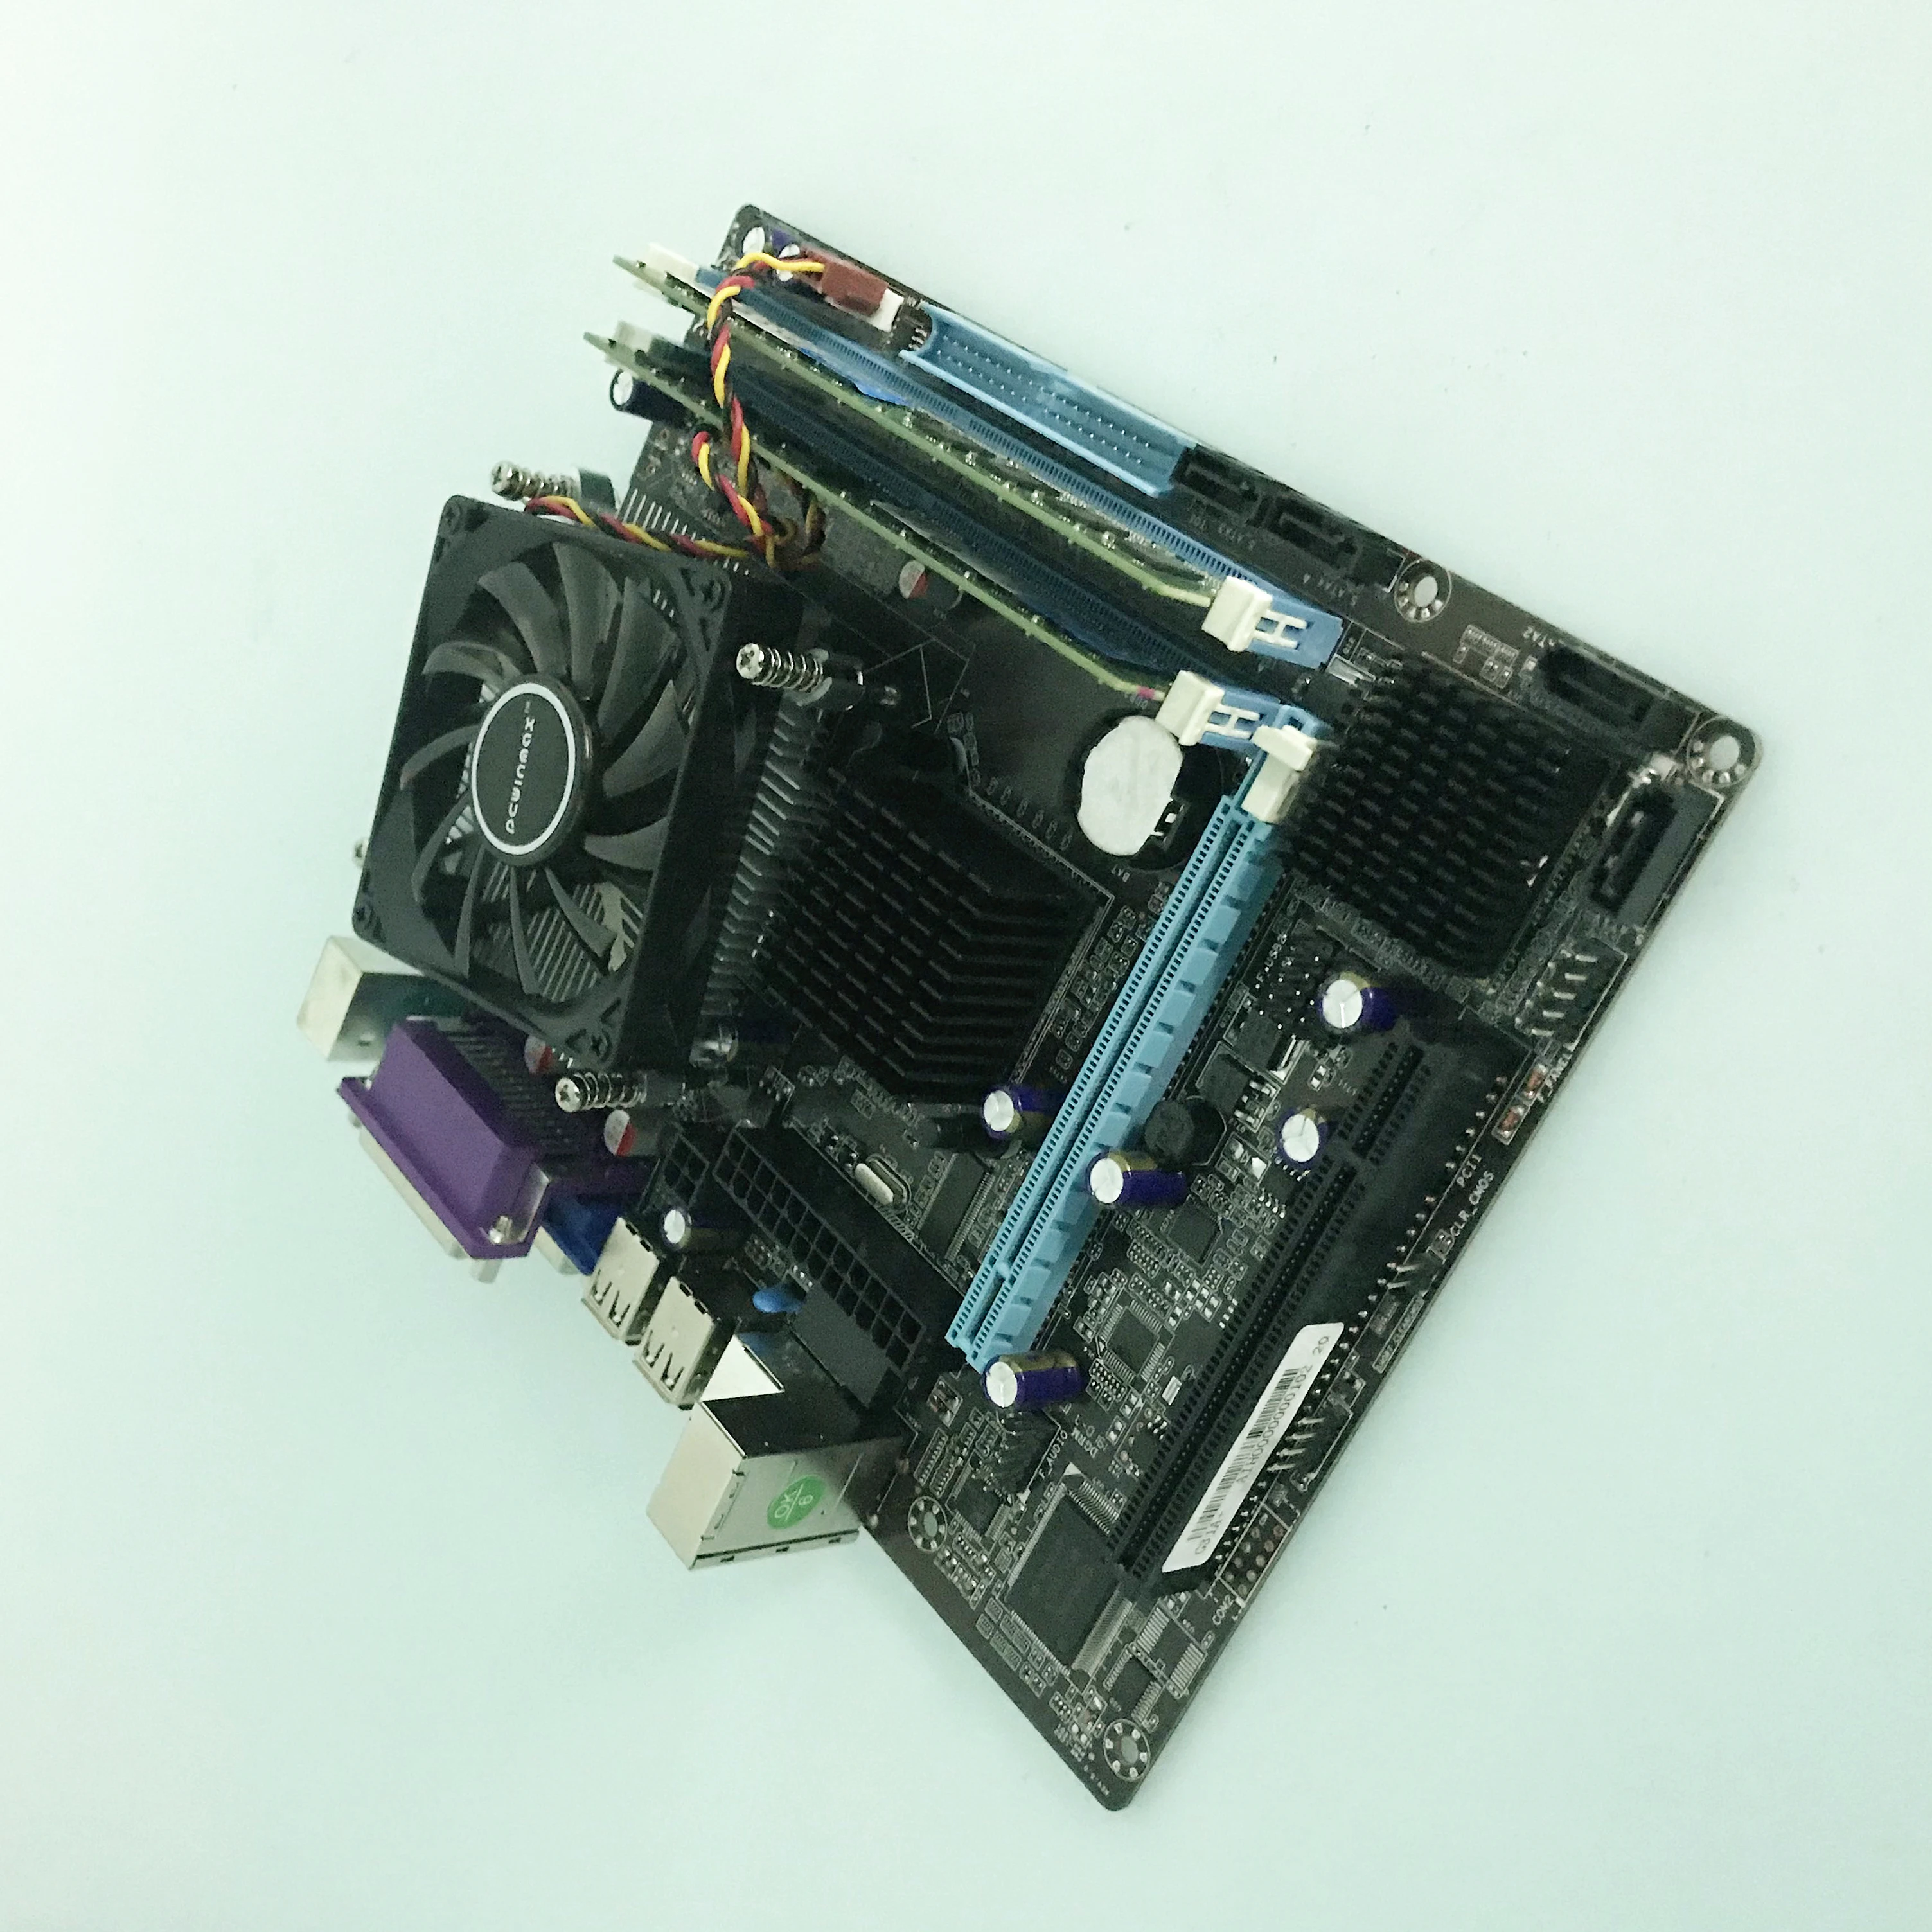 PCWINMAX комплект материнской платы. Материнская плата LGA 775/771 G31 с процессором E5xxx. Оперативная память DDR2 2G x 2R(4G), вентилятор